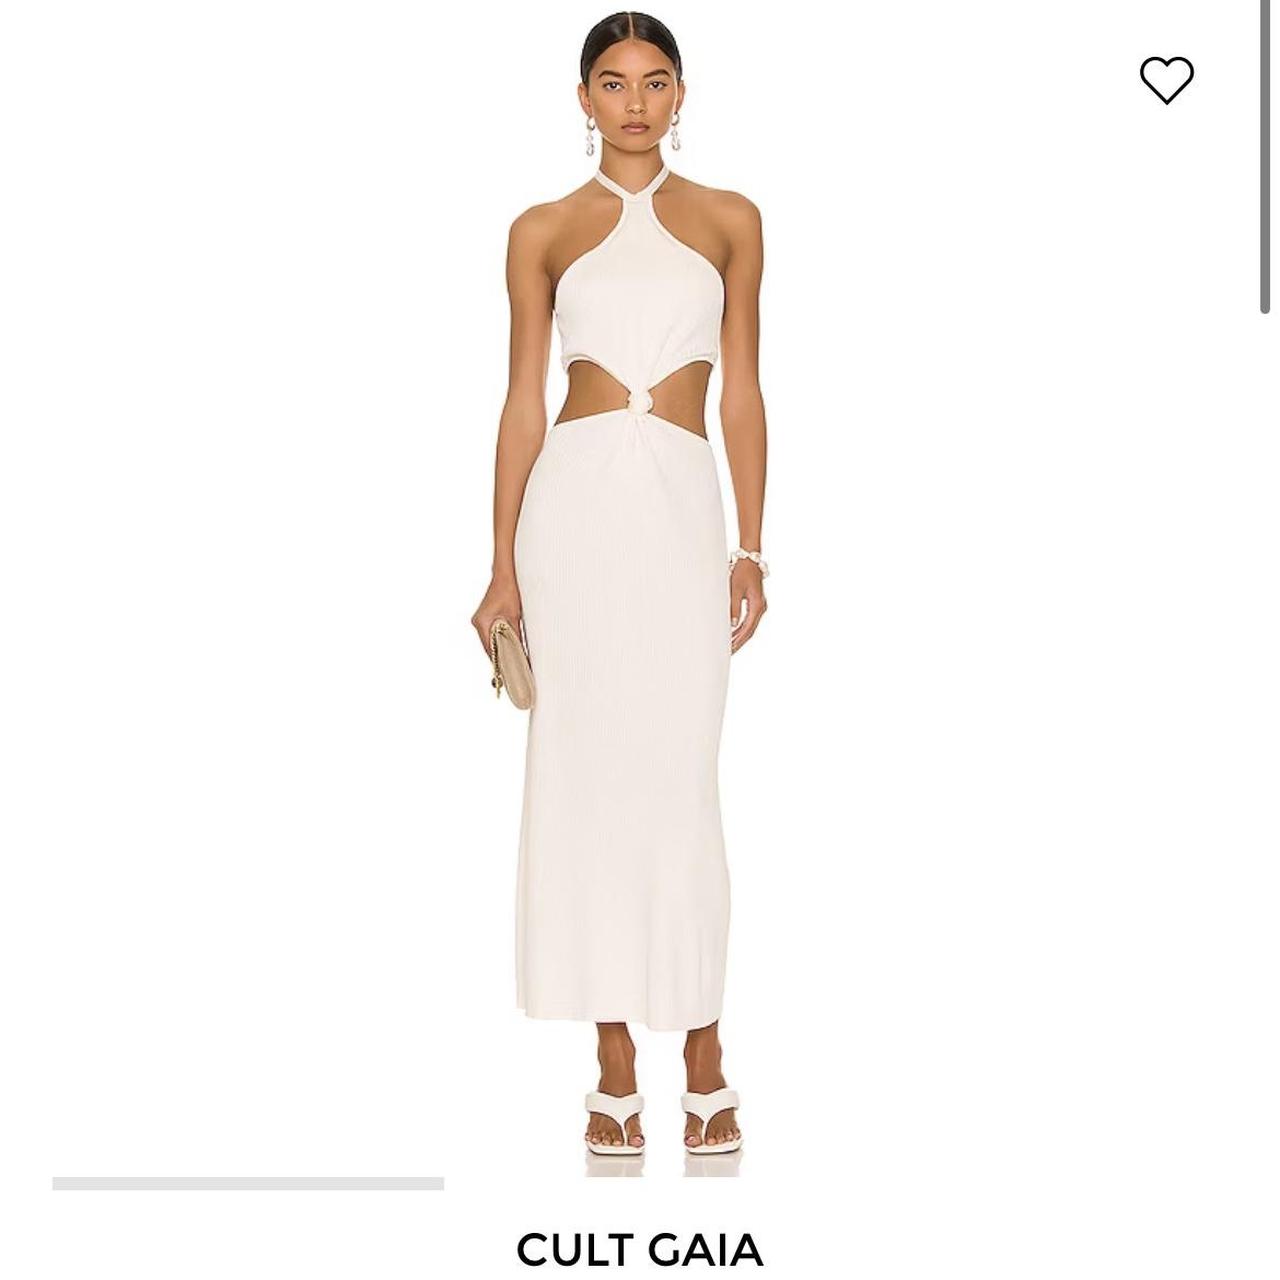 Cult Gaia Women's White Dress | Depop